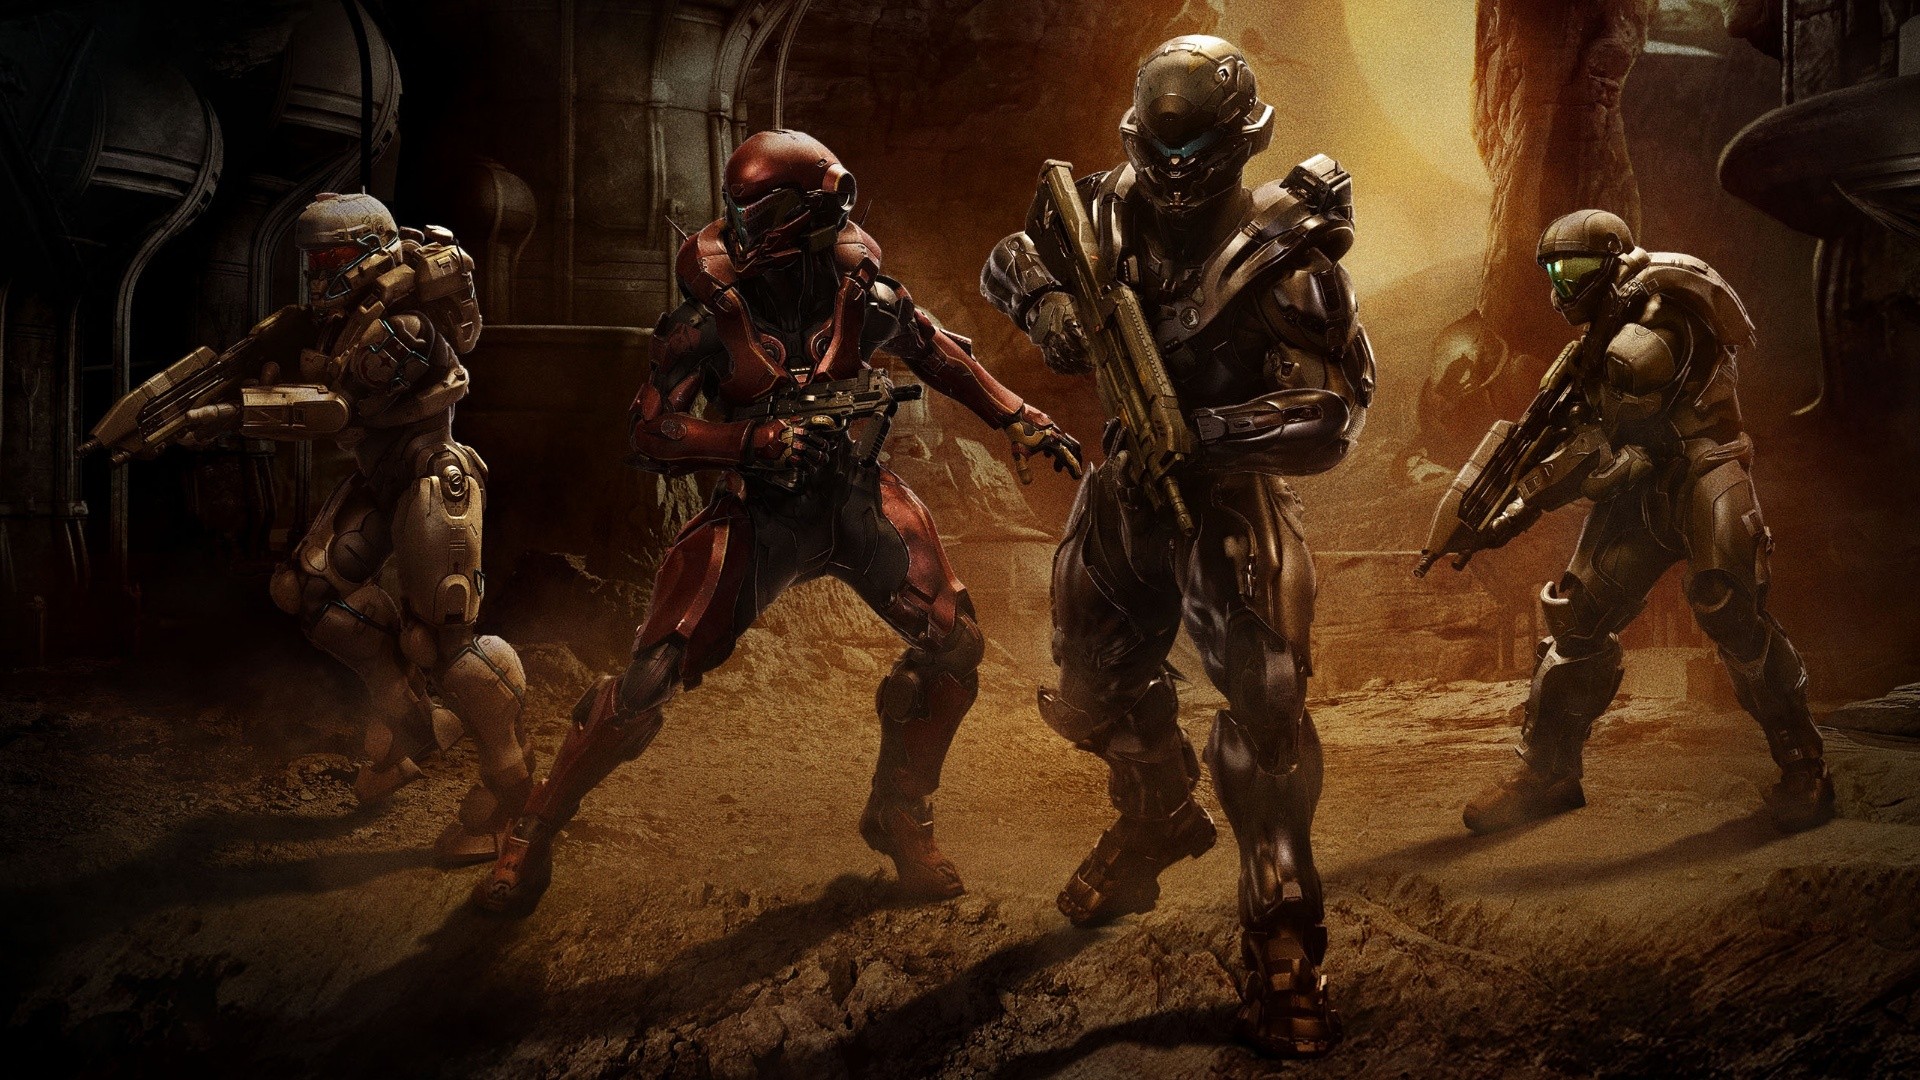 Wallpaper, soldier, Halo mythology, Osiris Squad, screenshot, warlord, pc game, mercenary 1920x1080